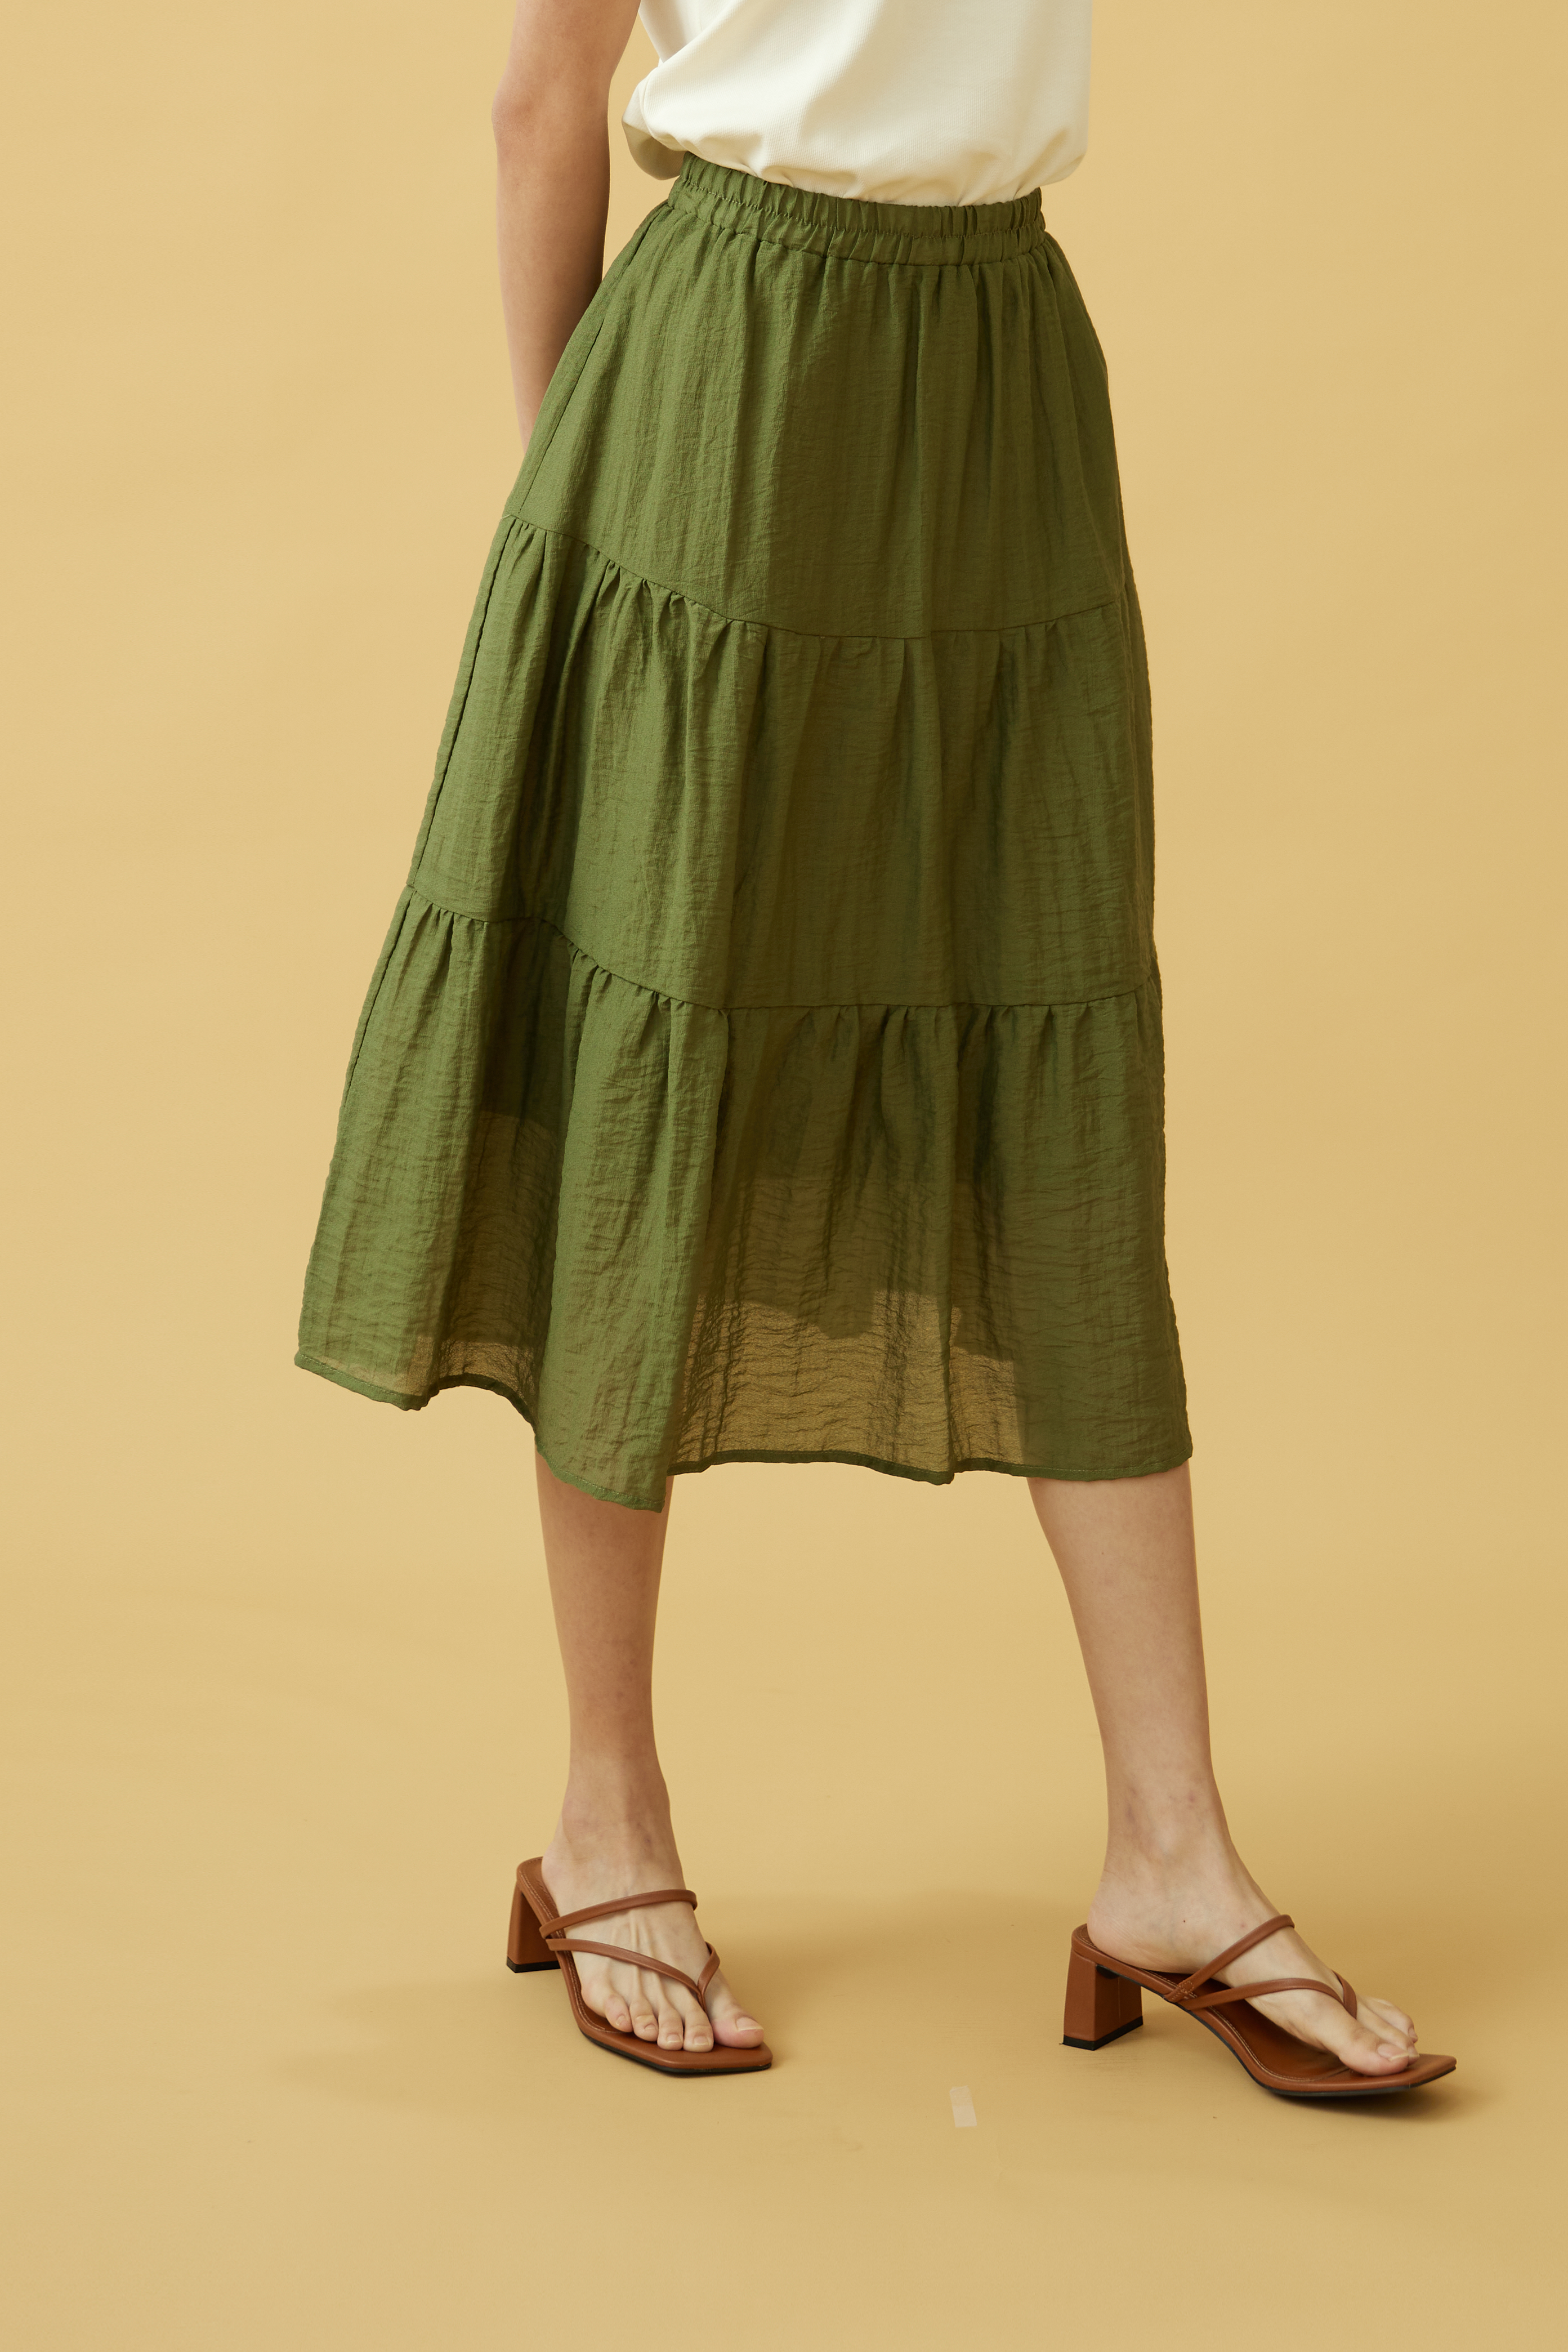 Lexie Tri-Tiered Skirt in Cream